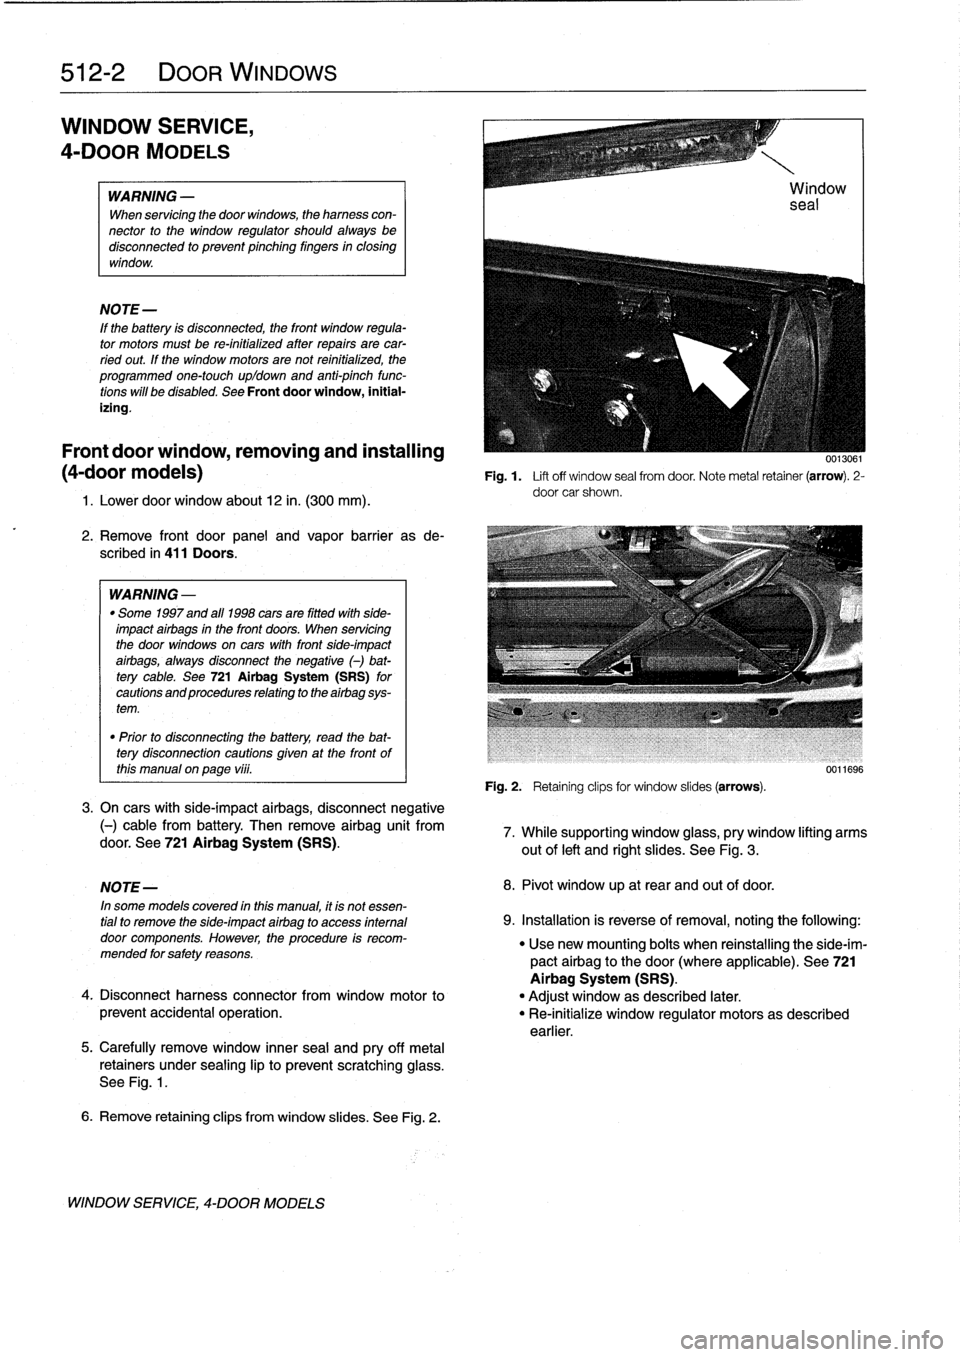 BMW 328i 1994 E36 Workshop Manual 
512-2

	

DOOR
WINDOWS

WINDOW
SERVICE,

4-DOOR
MODELS

WARNING
-

When
servicing
the
door
wíndows,
theharness
con-
nector
to
the
window
regulator
shouldalways
be
disconnected
to
prevent
pinching
fi